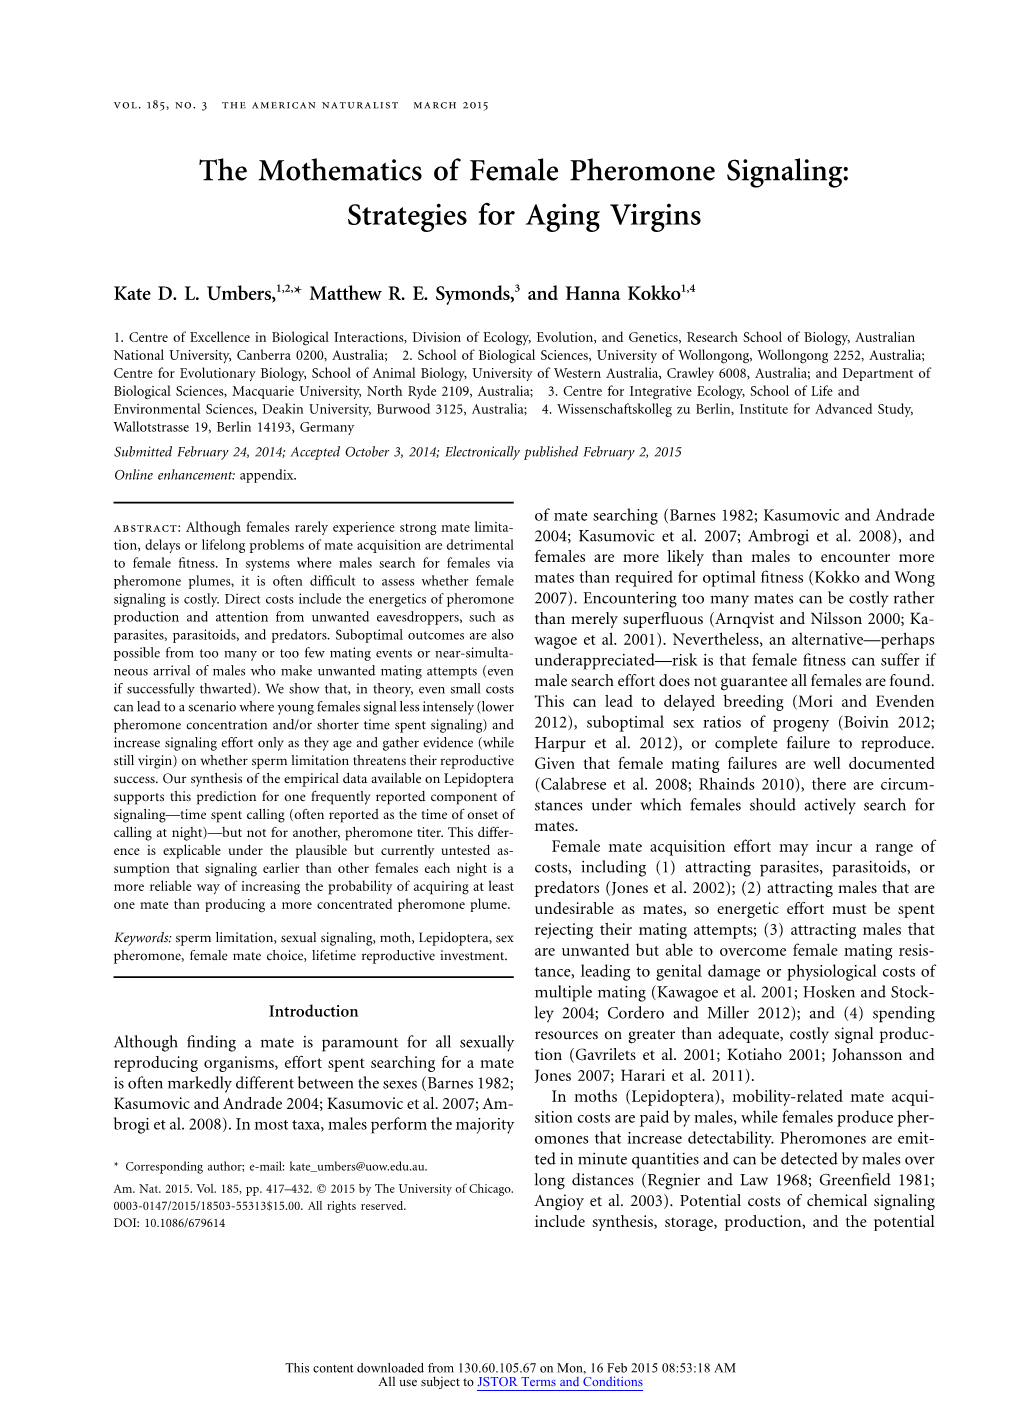 The Mothematics of Female Pheromone Signaling: Strategies for Aging Virgins